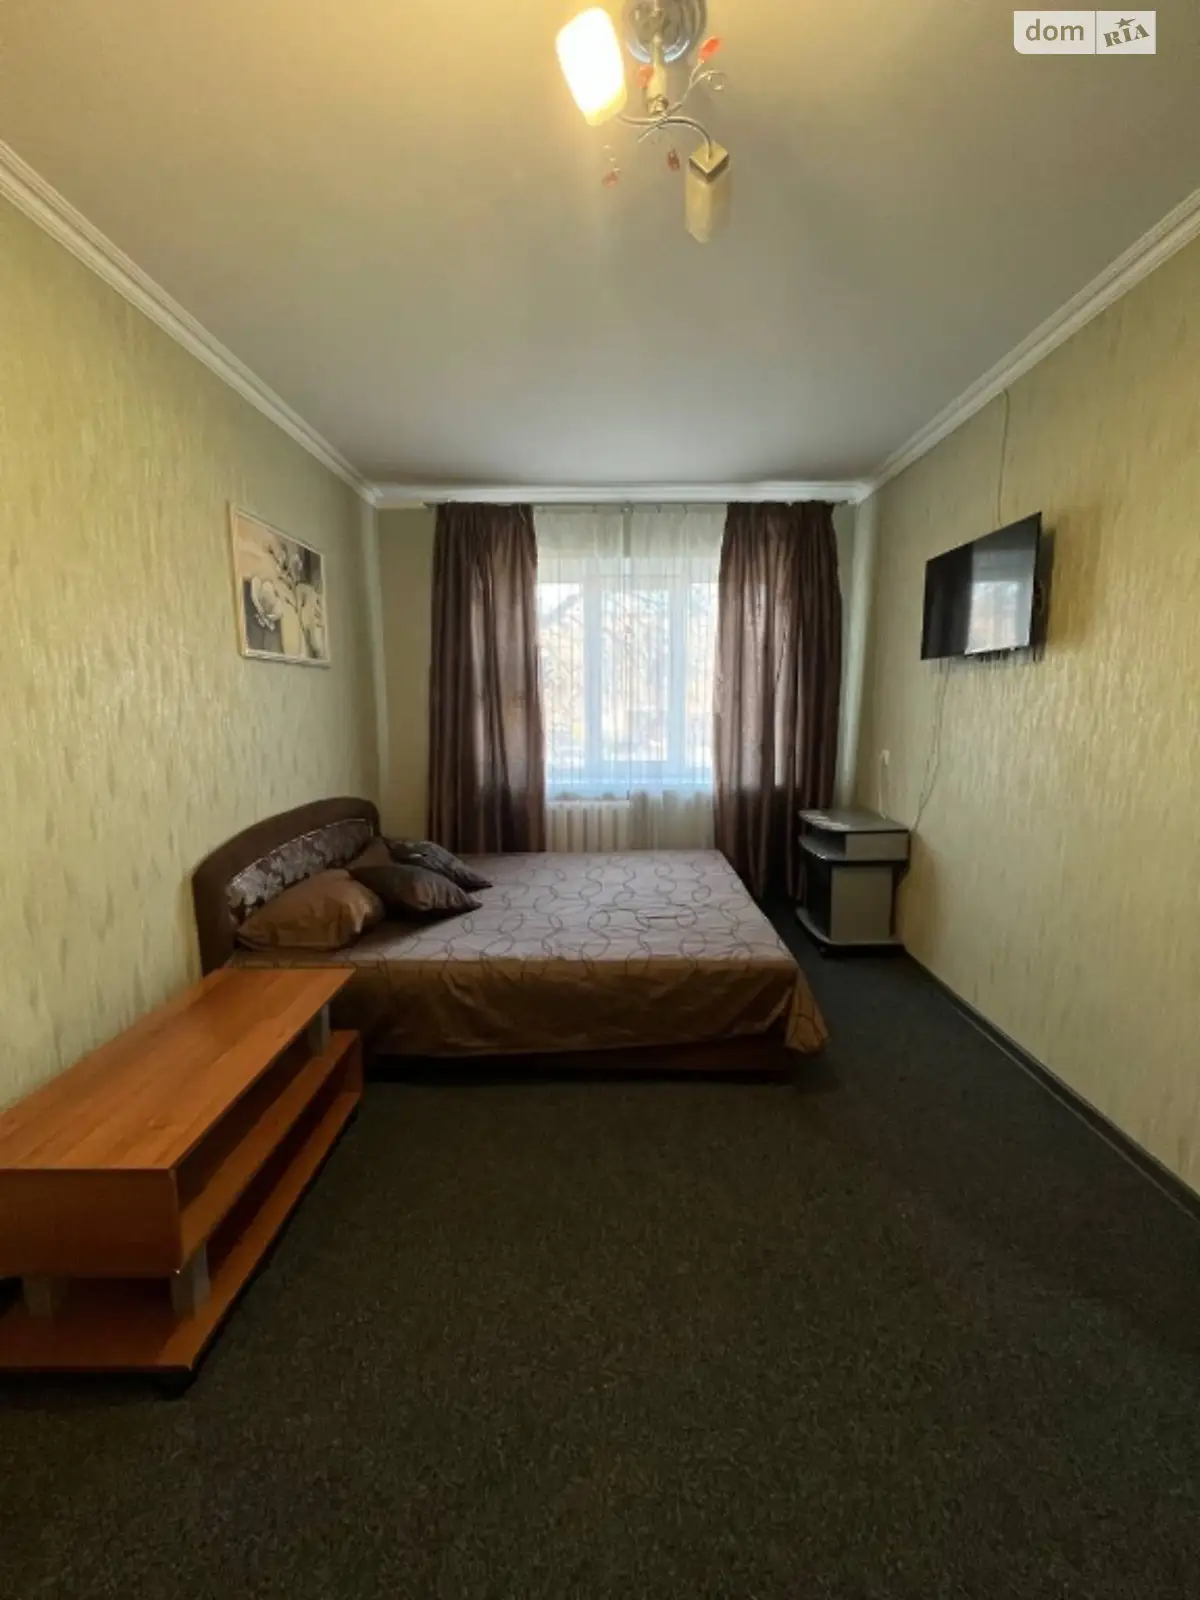 1-кімнатна квартира у Запоріжжі, цена: 900 грн